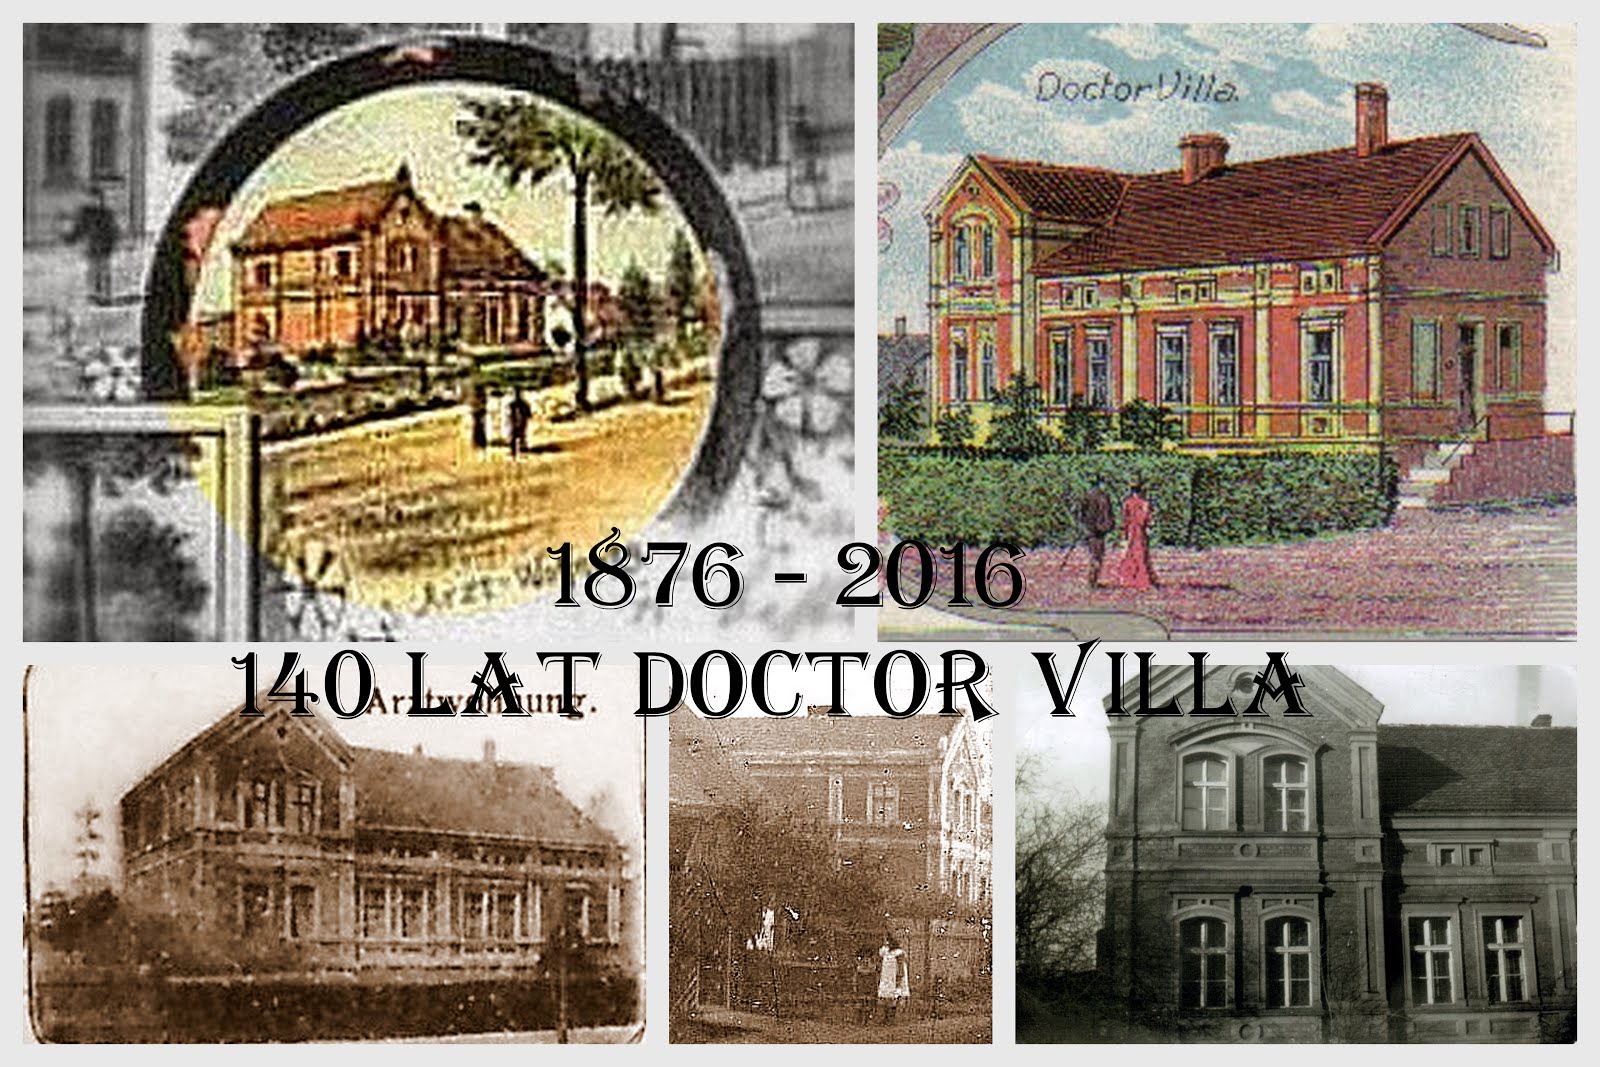 Doctor Villa ma 140 lat